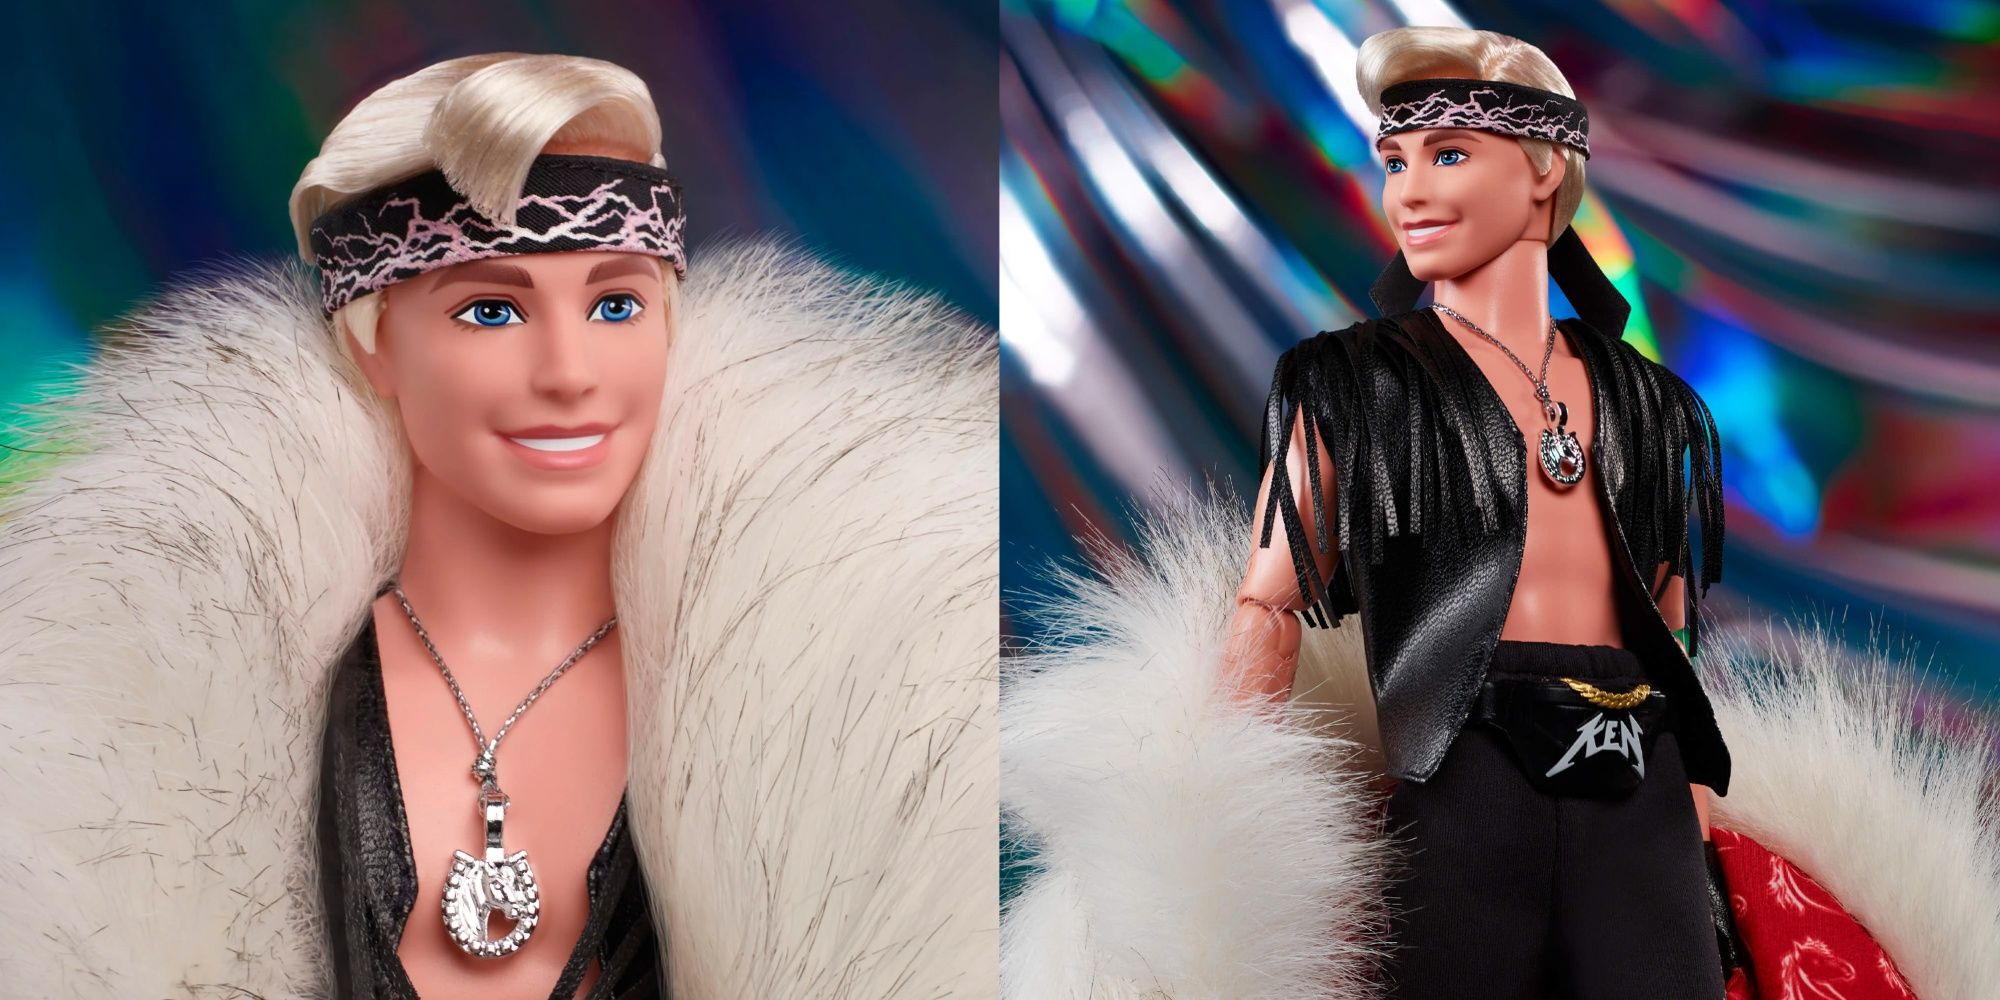 Mattel Selling Ken Doll Wearing Barbie Movie's 'I Am Kenough' Hoodie